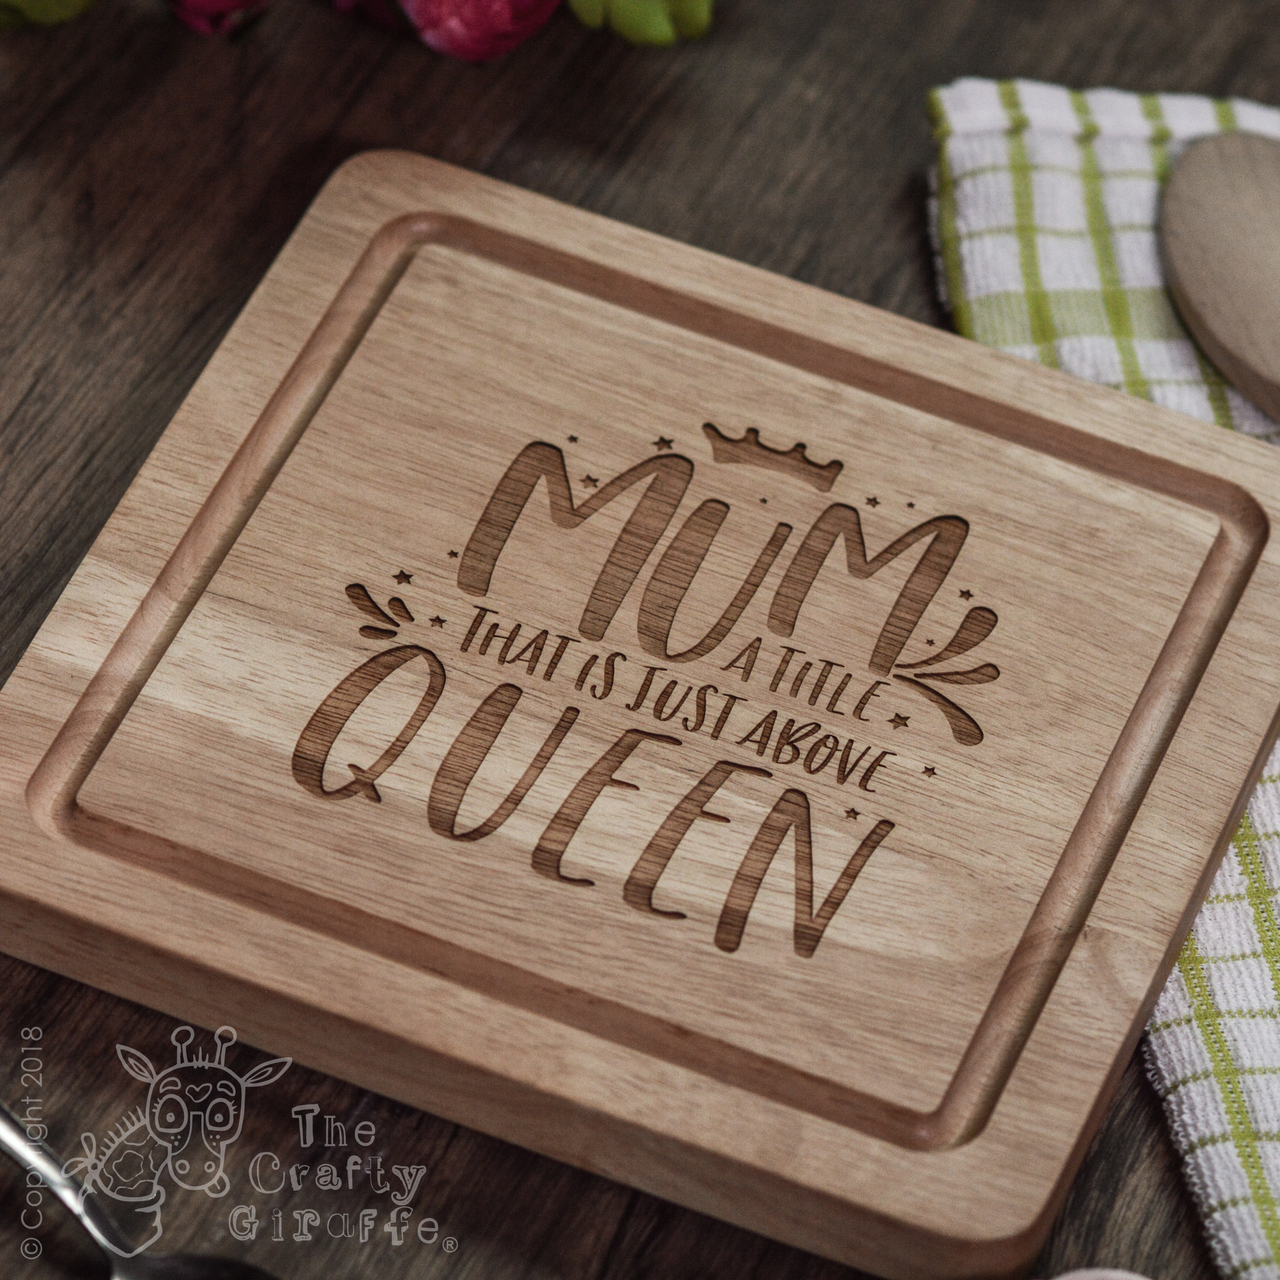 Mum; a title just above Queen Wooden Board